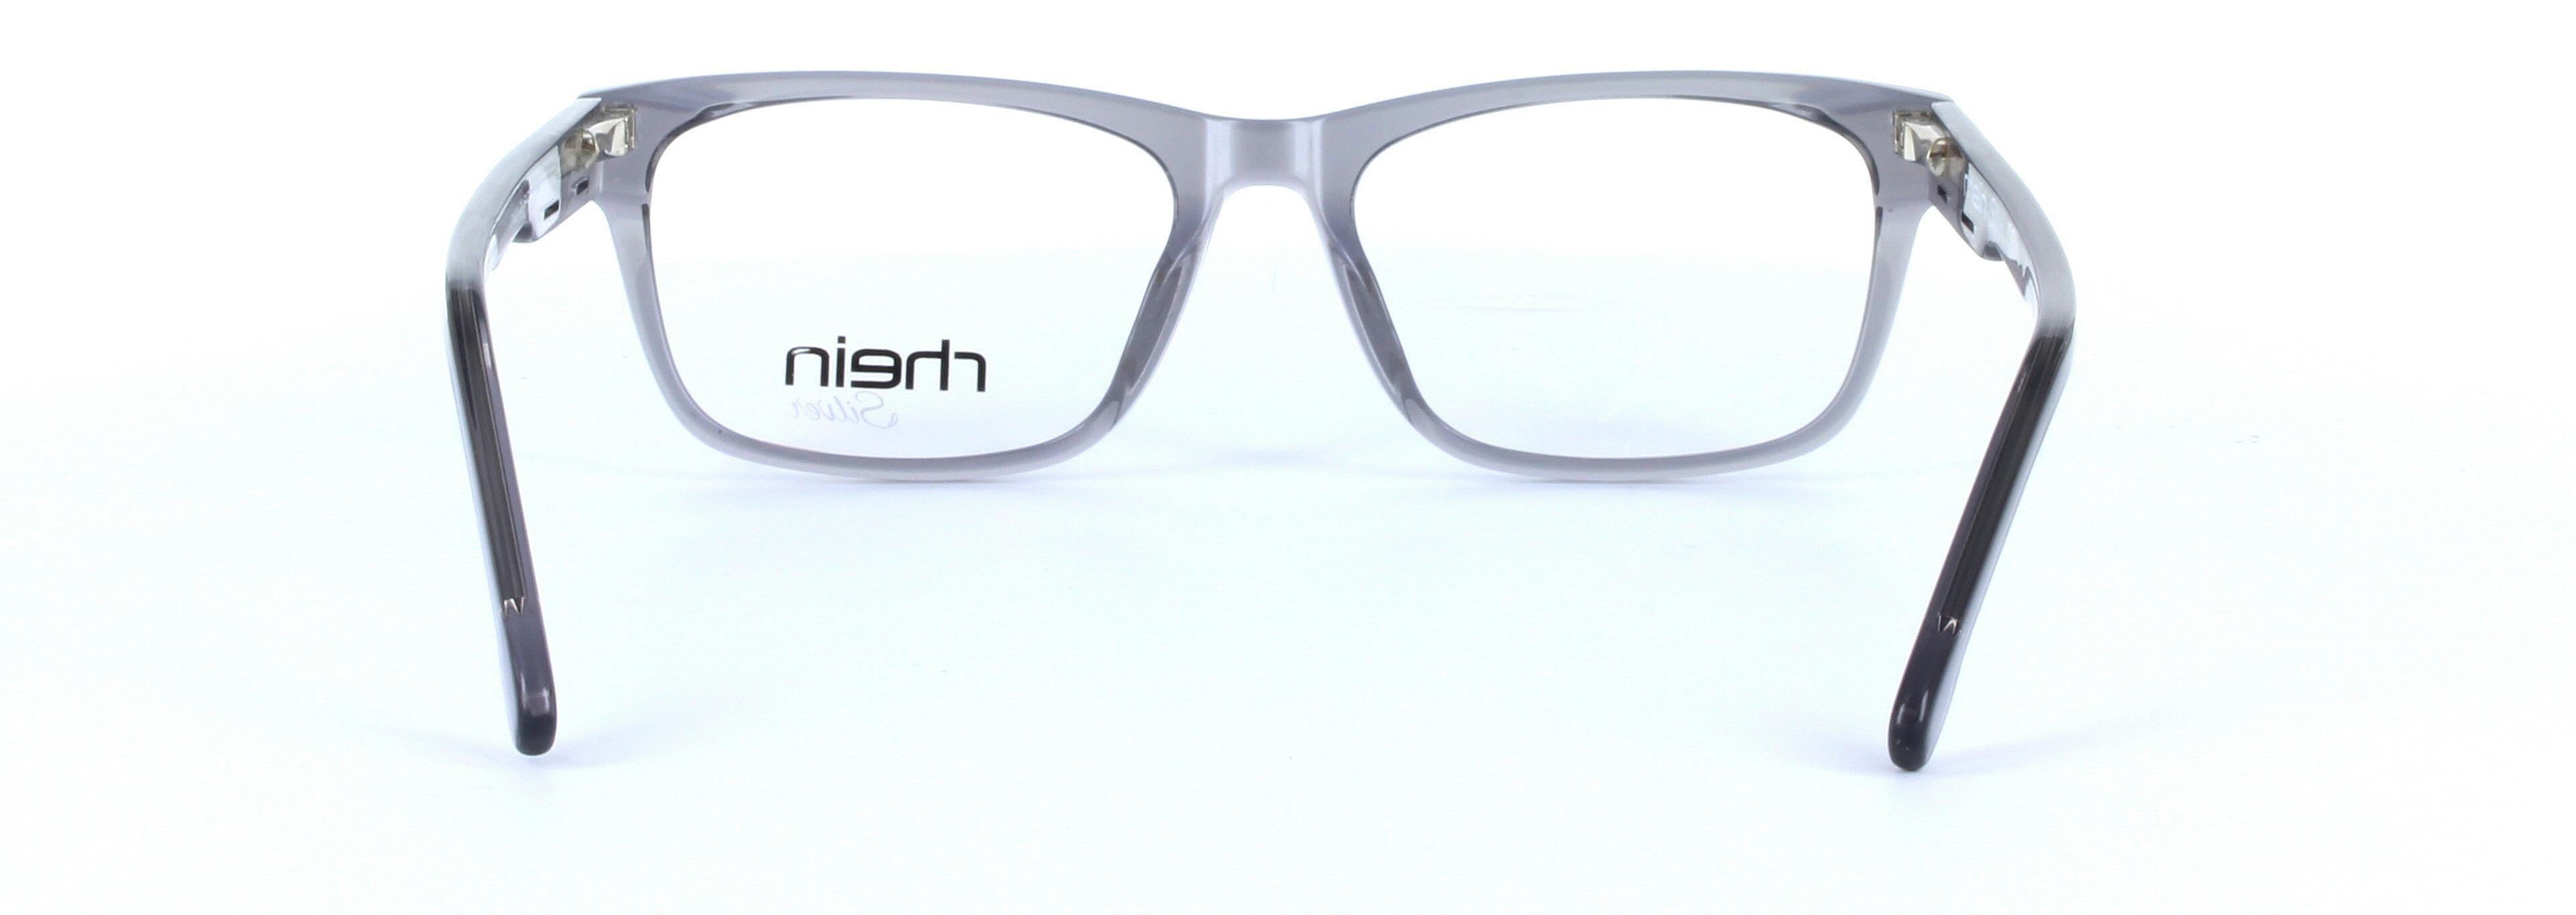 Cygnus Blue Full Rim Rectangular Plastic Glasses - Image View 3